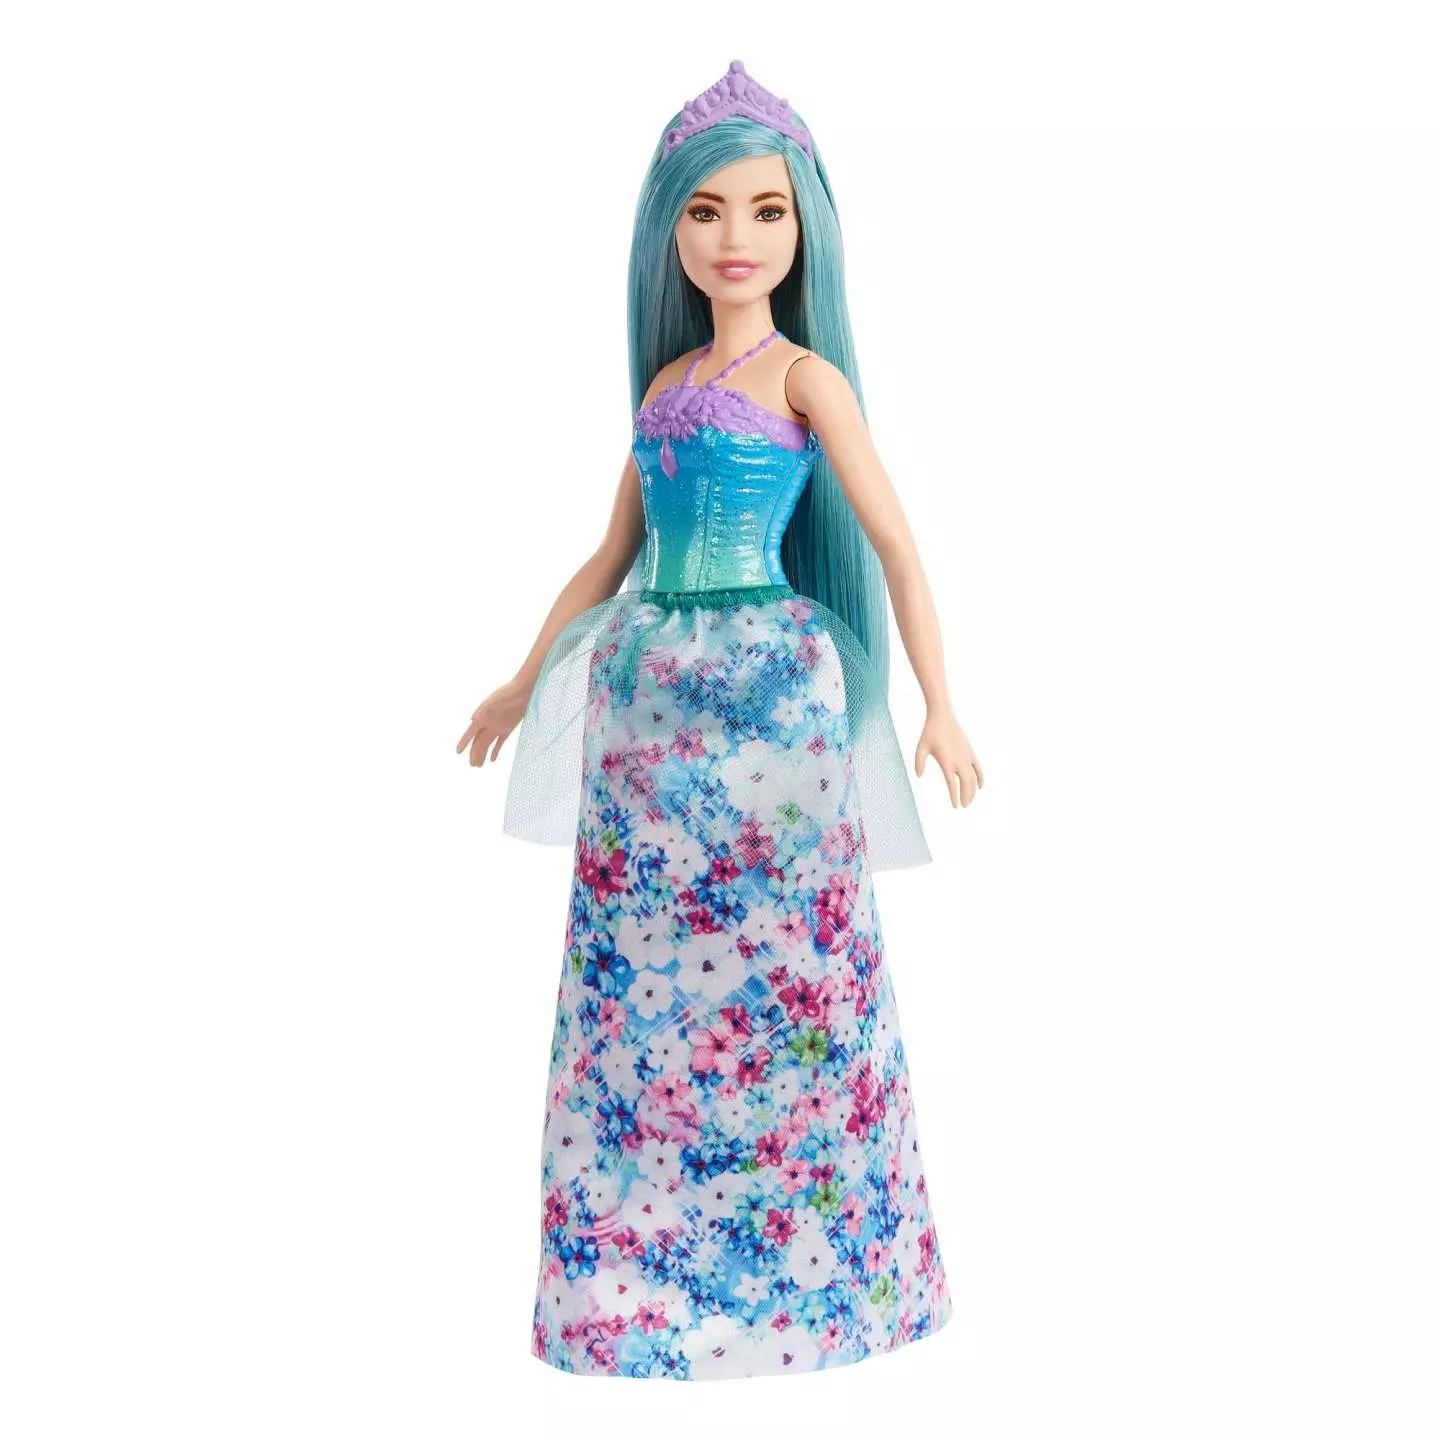 Barbie Dreamtopia Royal Doll Teal Hair